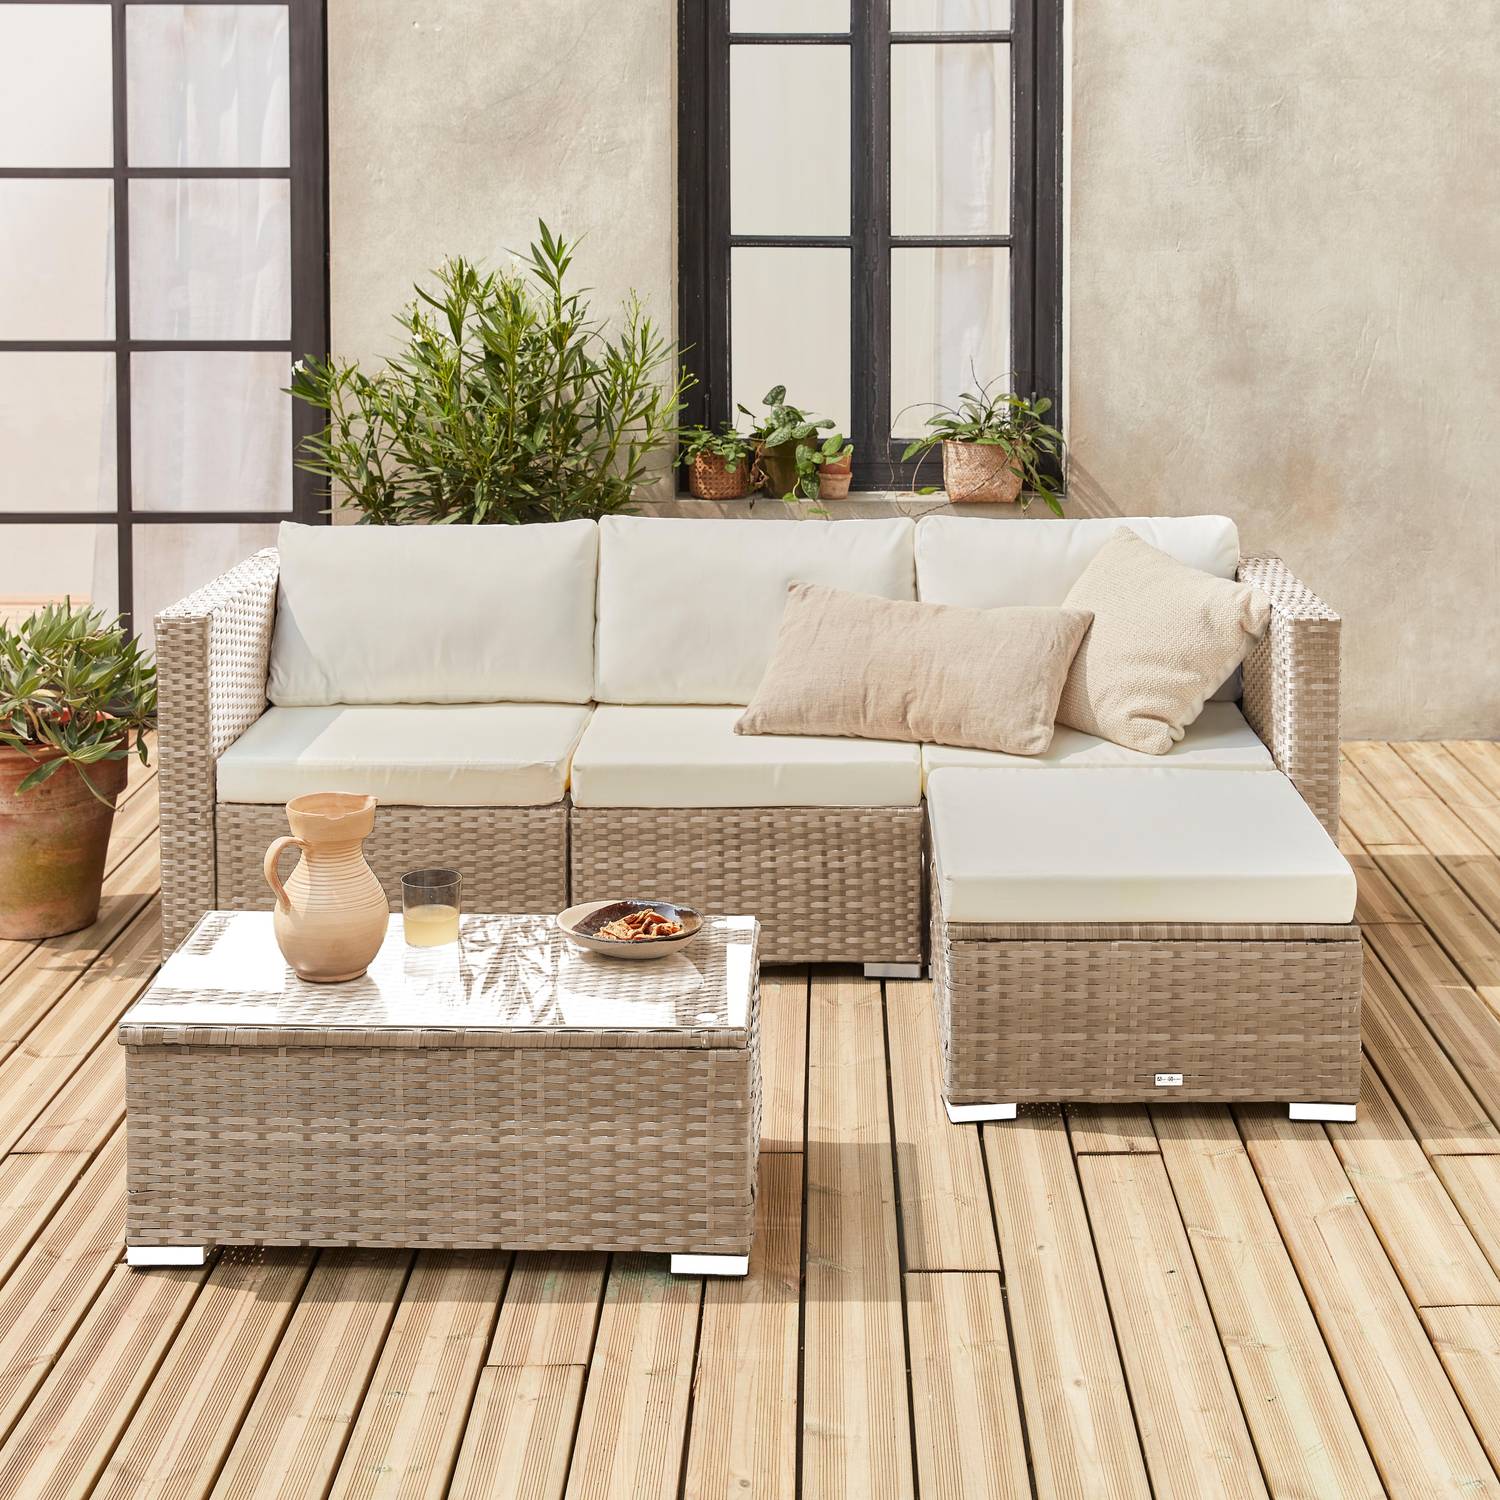 4-seater rattan garden sofa set - sofa, footrest, coffee table - Torino - Beige Photo2